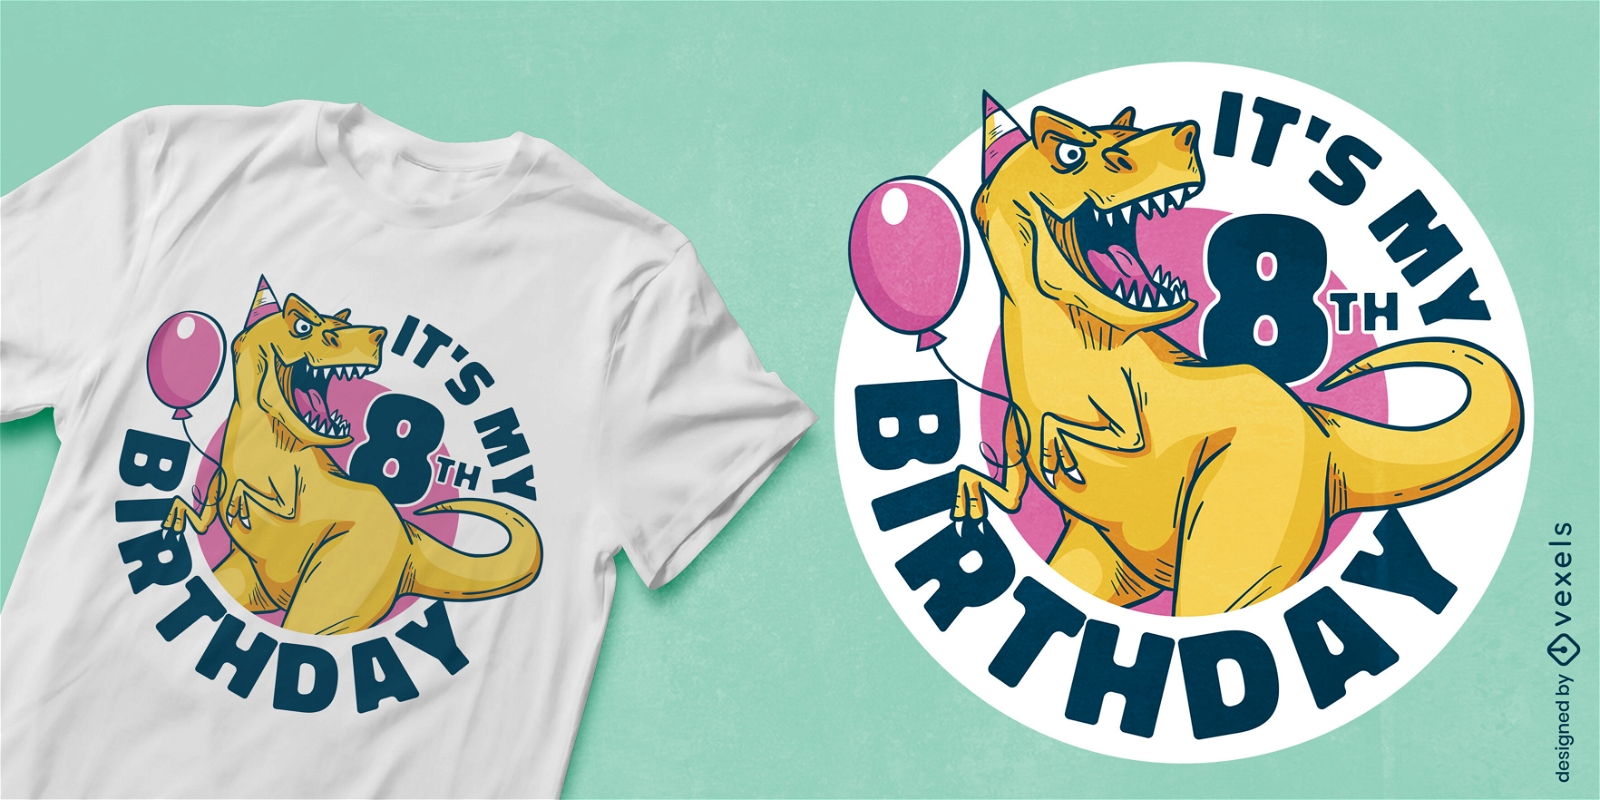 Nominal Pintura escocés Descarga Vector De Diseño De Camiseta De Dinosaurio T-rex De Cumpleaños